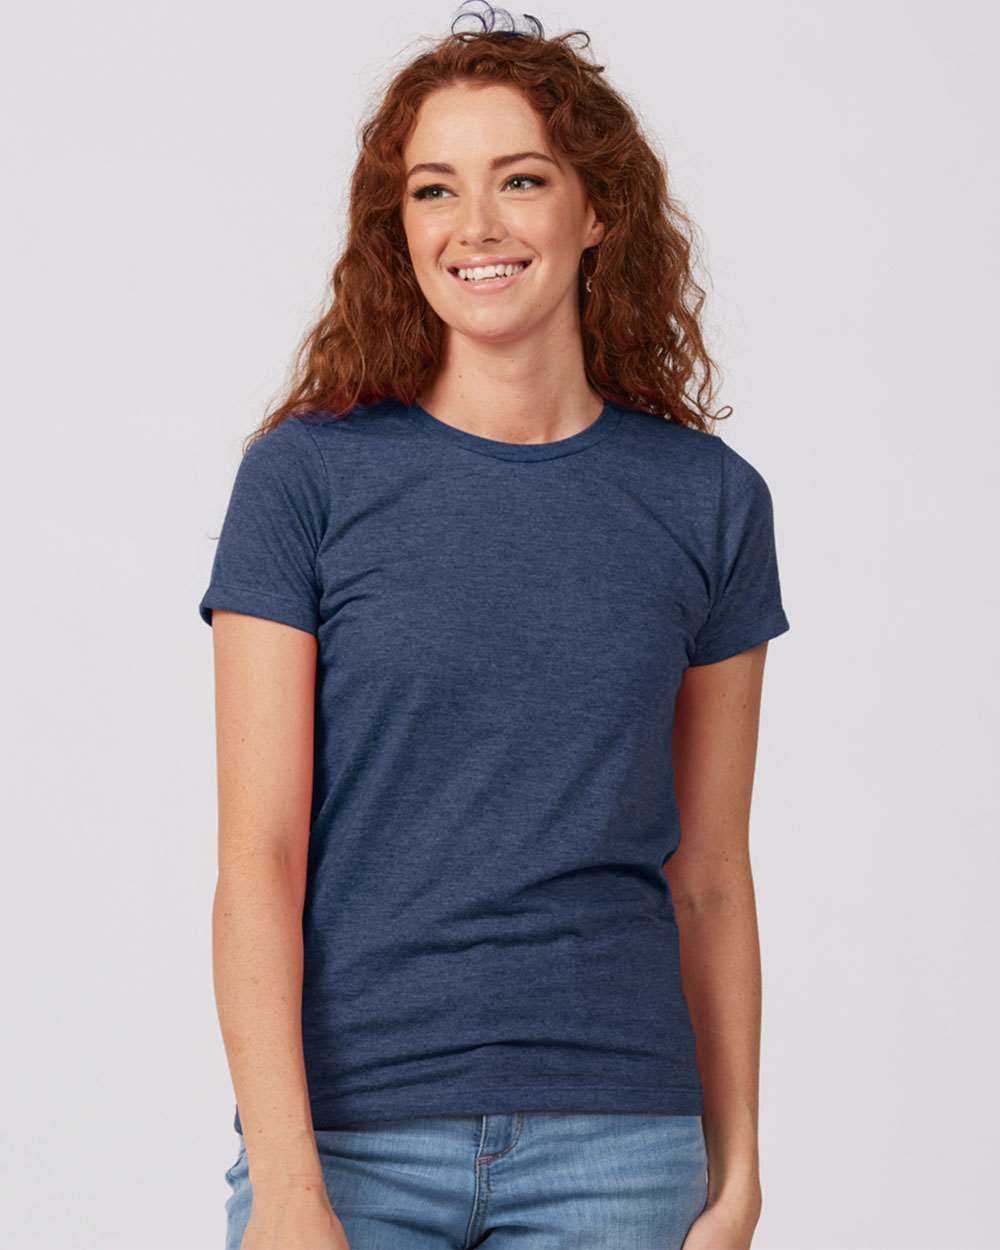 Tultex 542 Women's Premium Cotton Blend T-Shirt - Navy Heather - HIT a Double